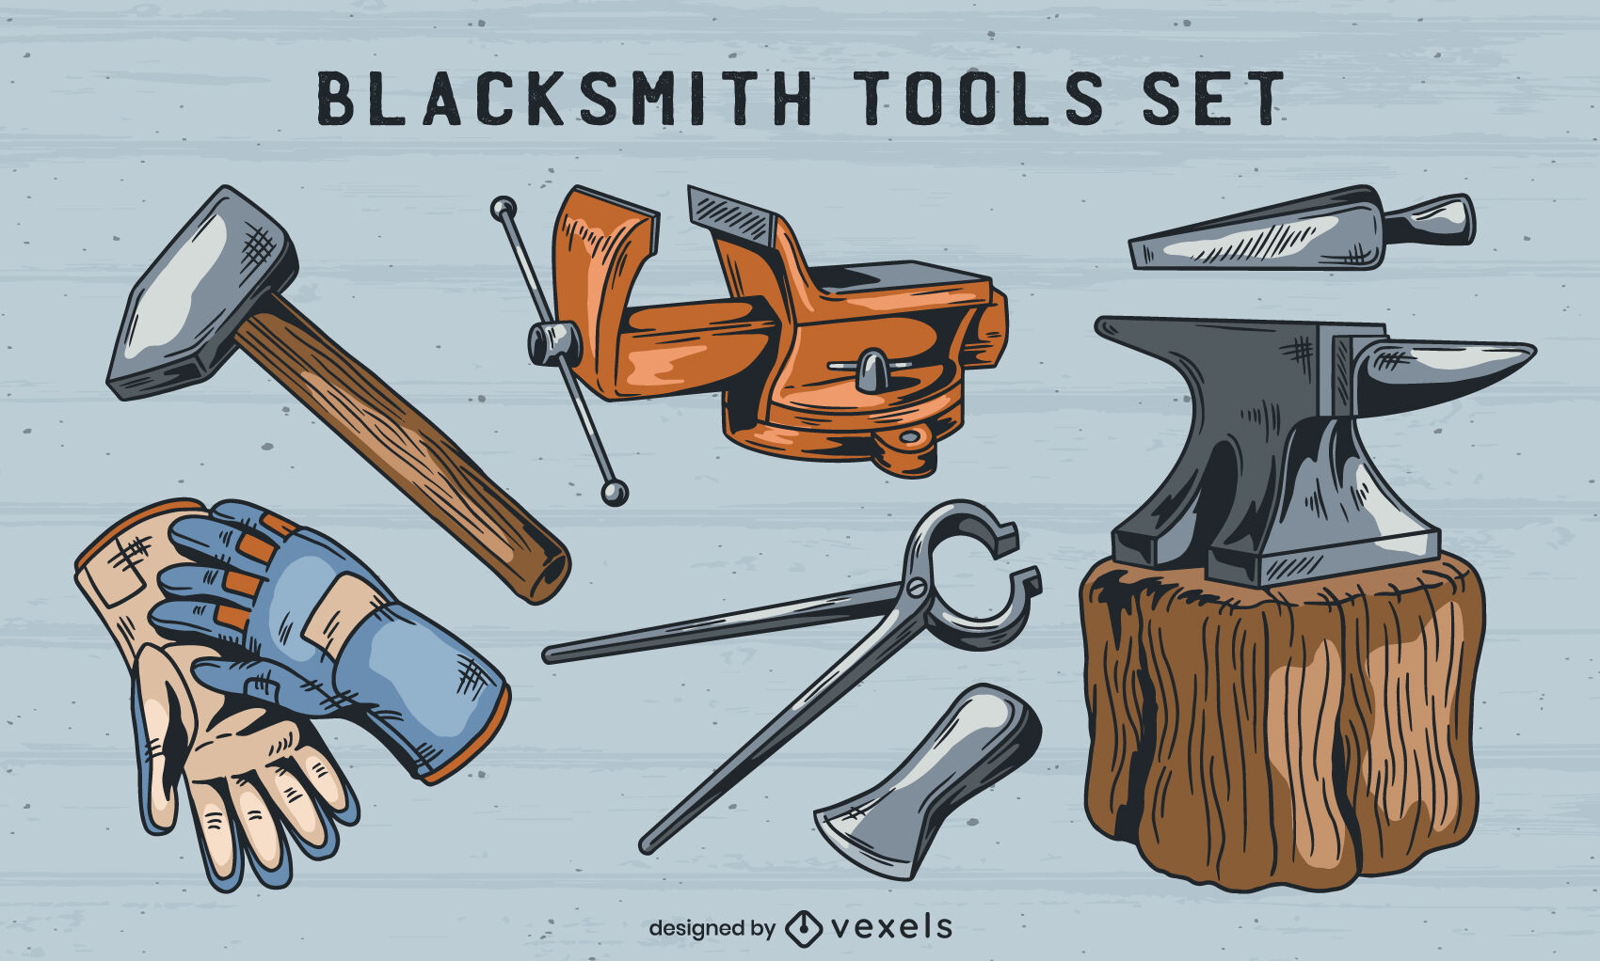 Blacksmith tools set